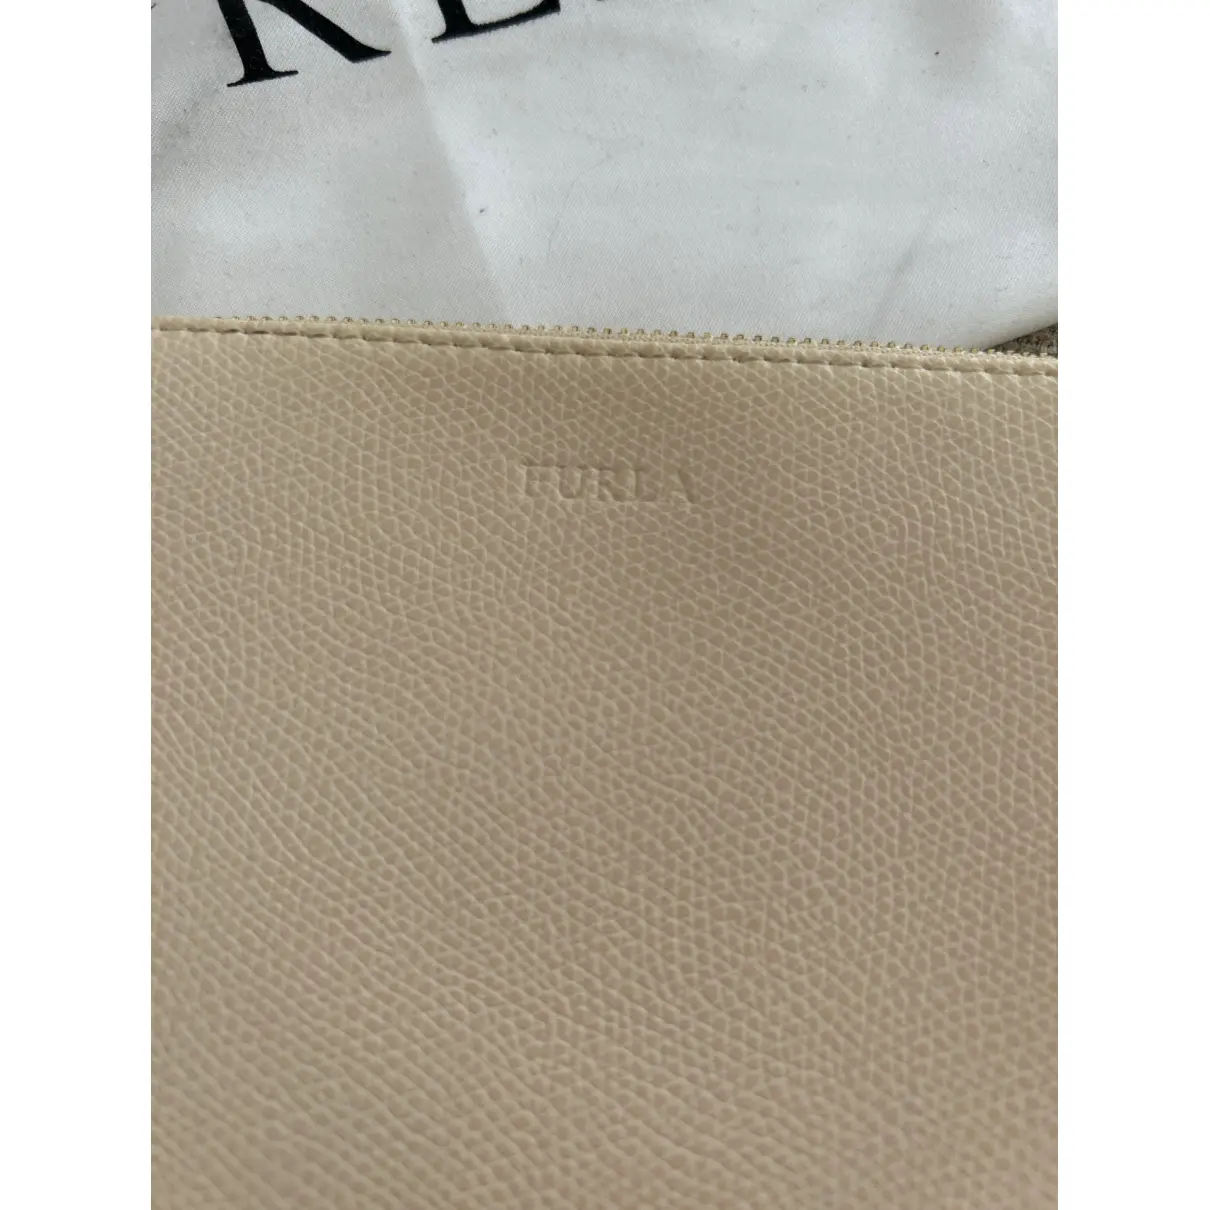 Buy Furla Leather purse online